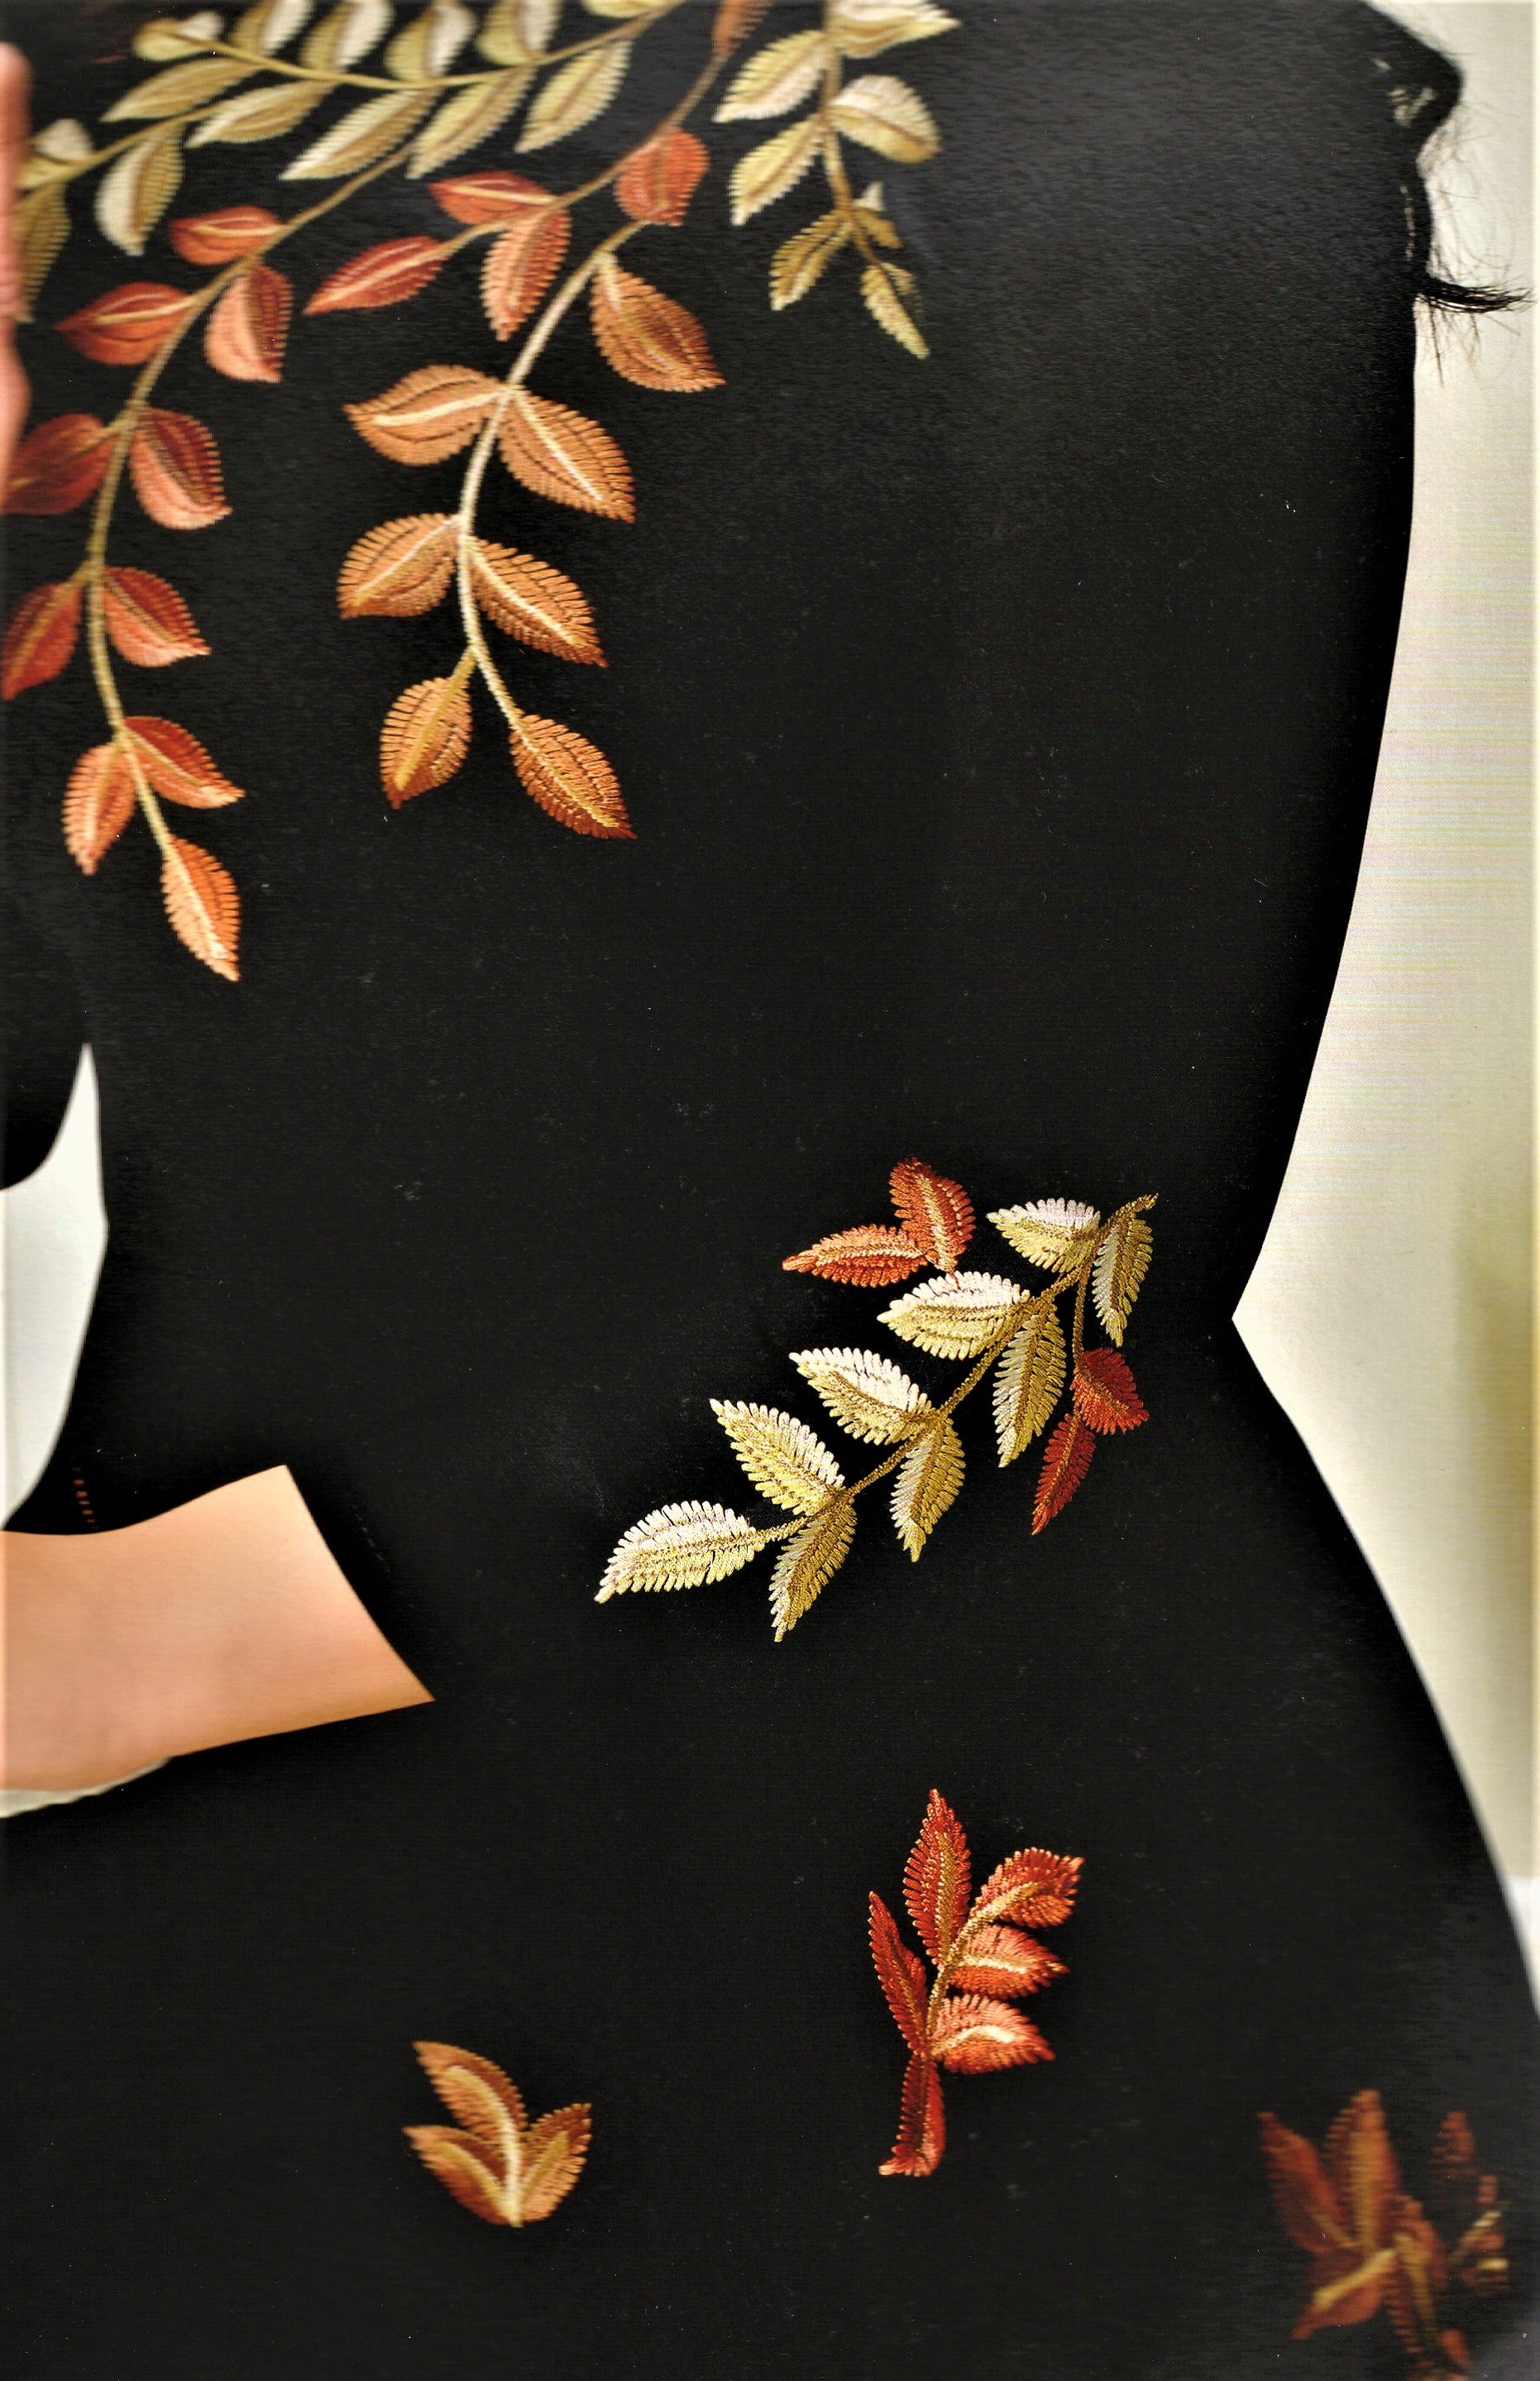 Designer Semi Stitched Black Layered Lehenga Skirt cum Salwar Suit with Resham Embroidery - GlitterGleam